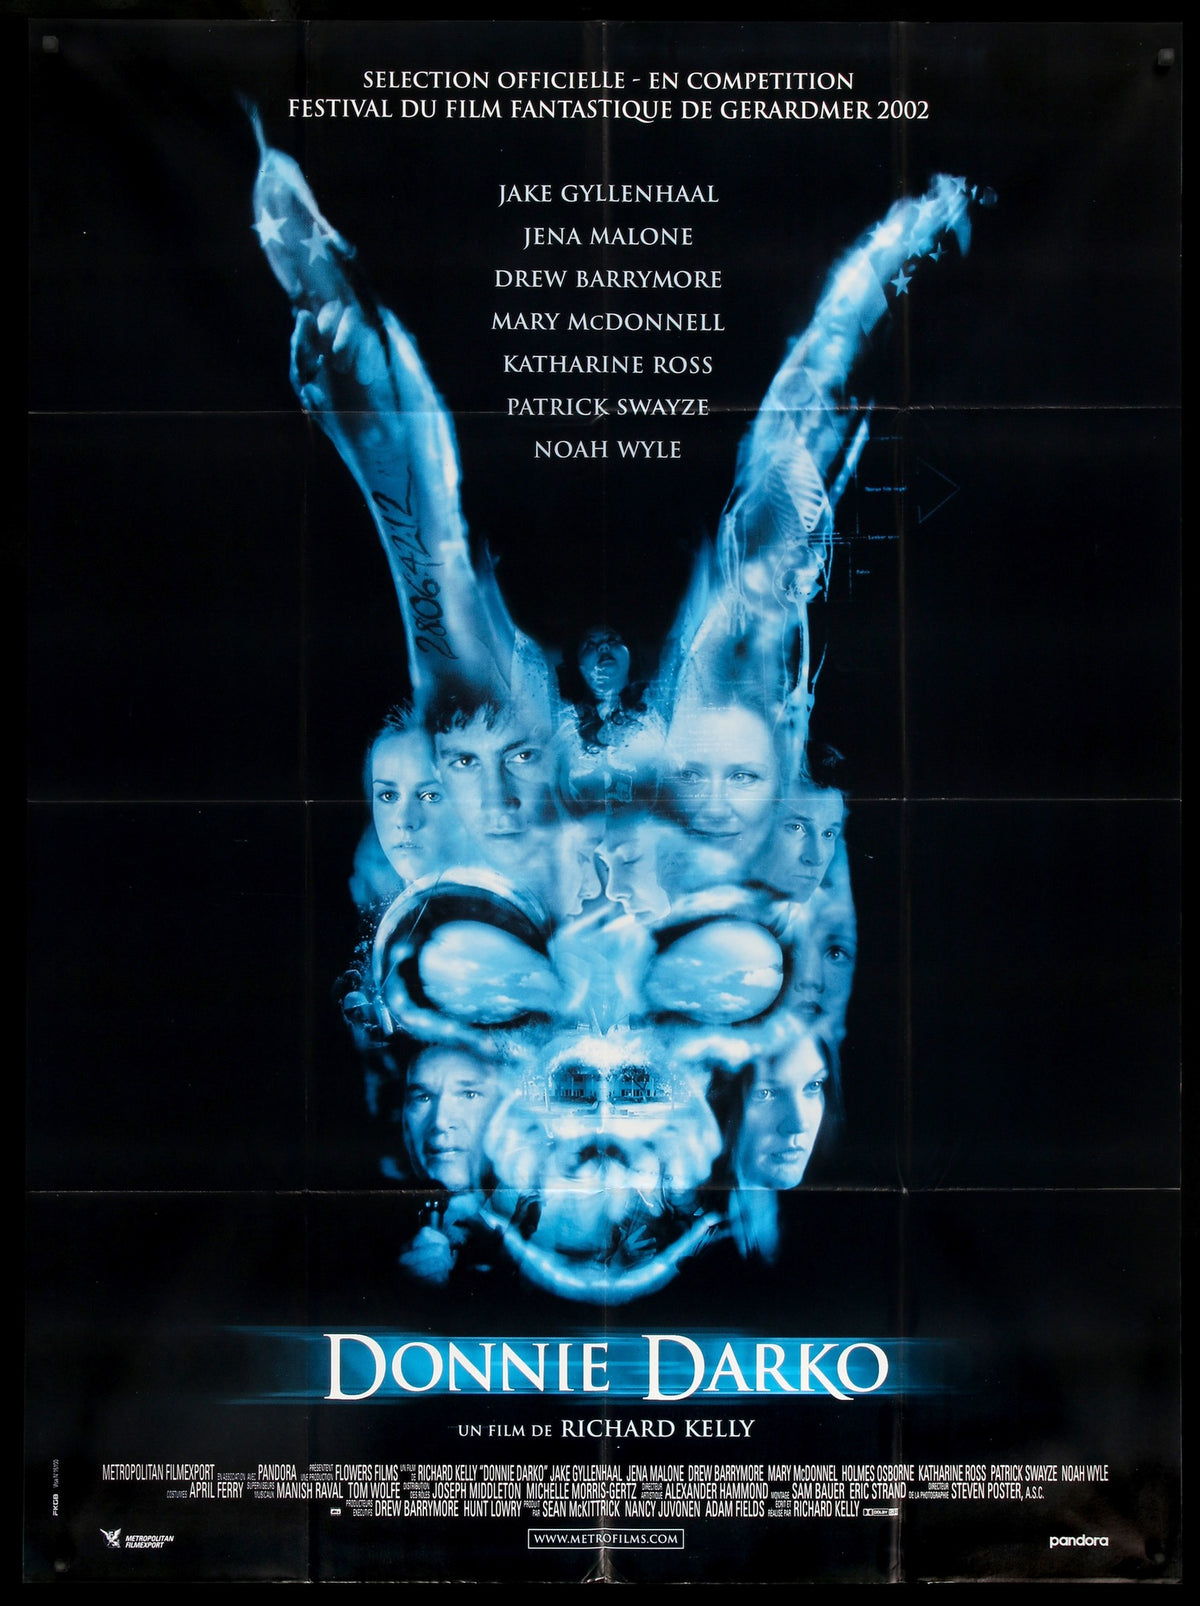 Donnie Darko (2001) original movie poster for sale at Original Film Art